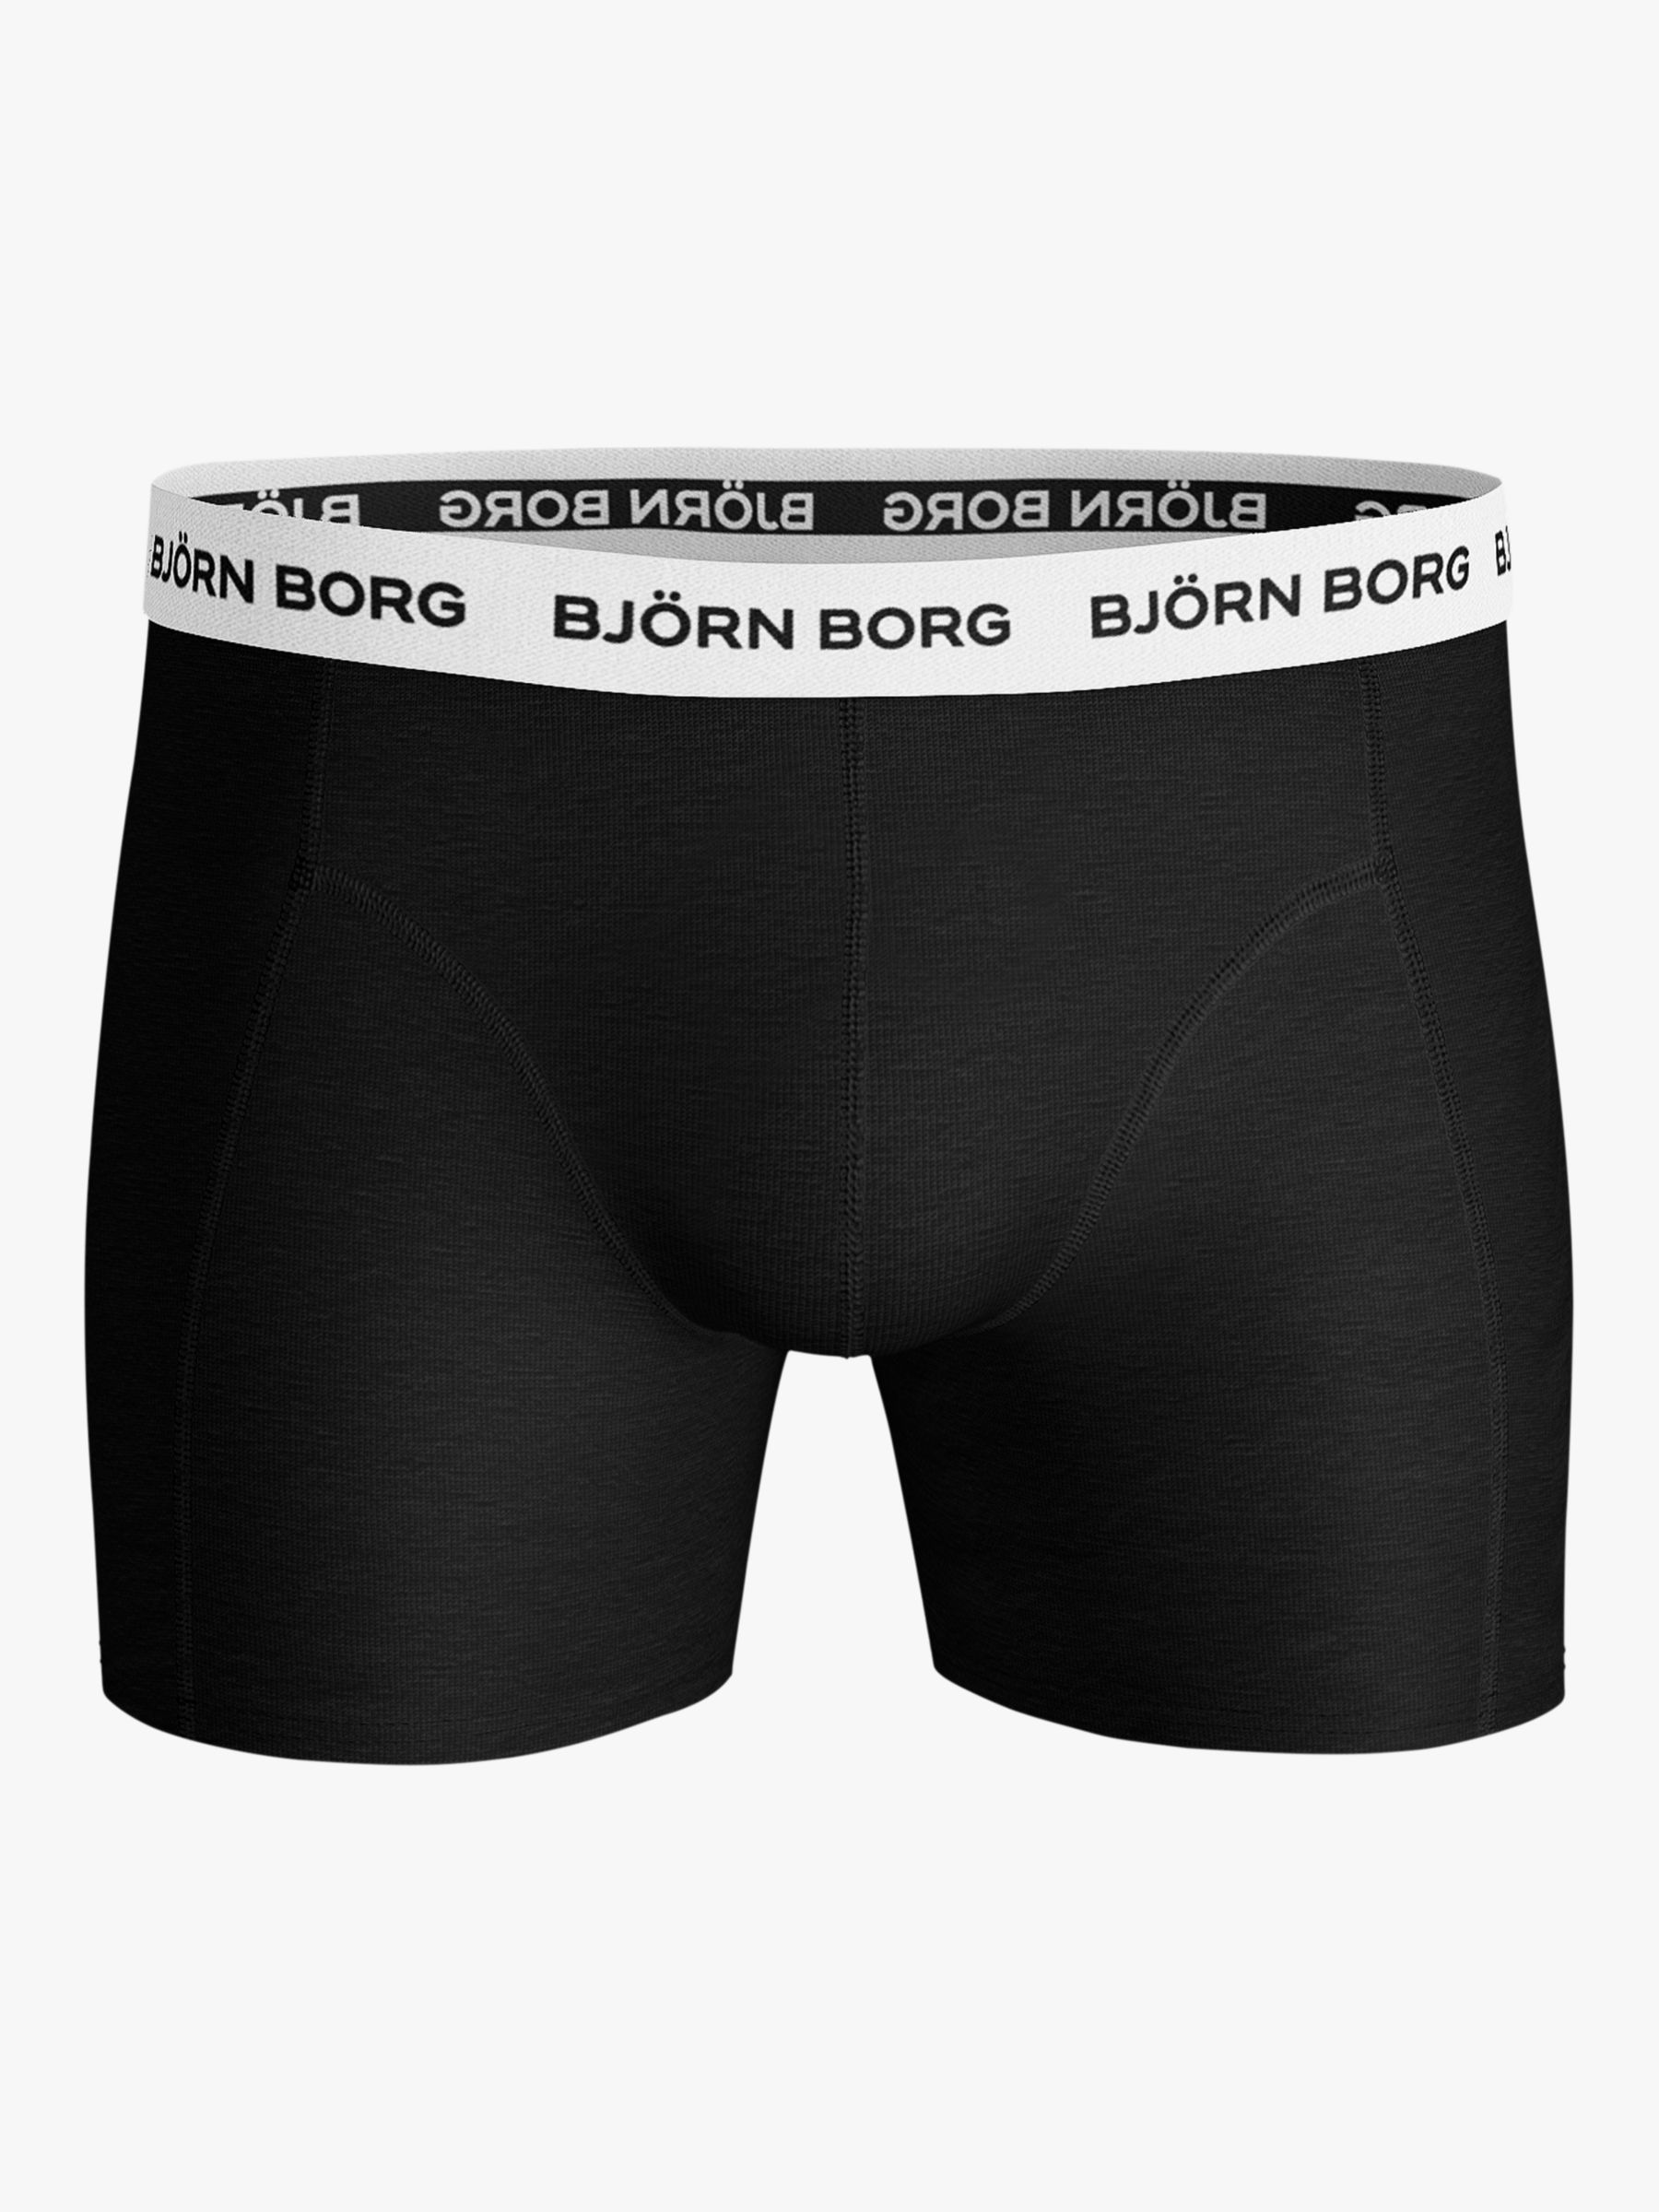 Björn Borg Solid Trunks, Pack of 5, Black, S